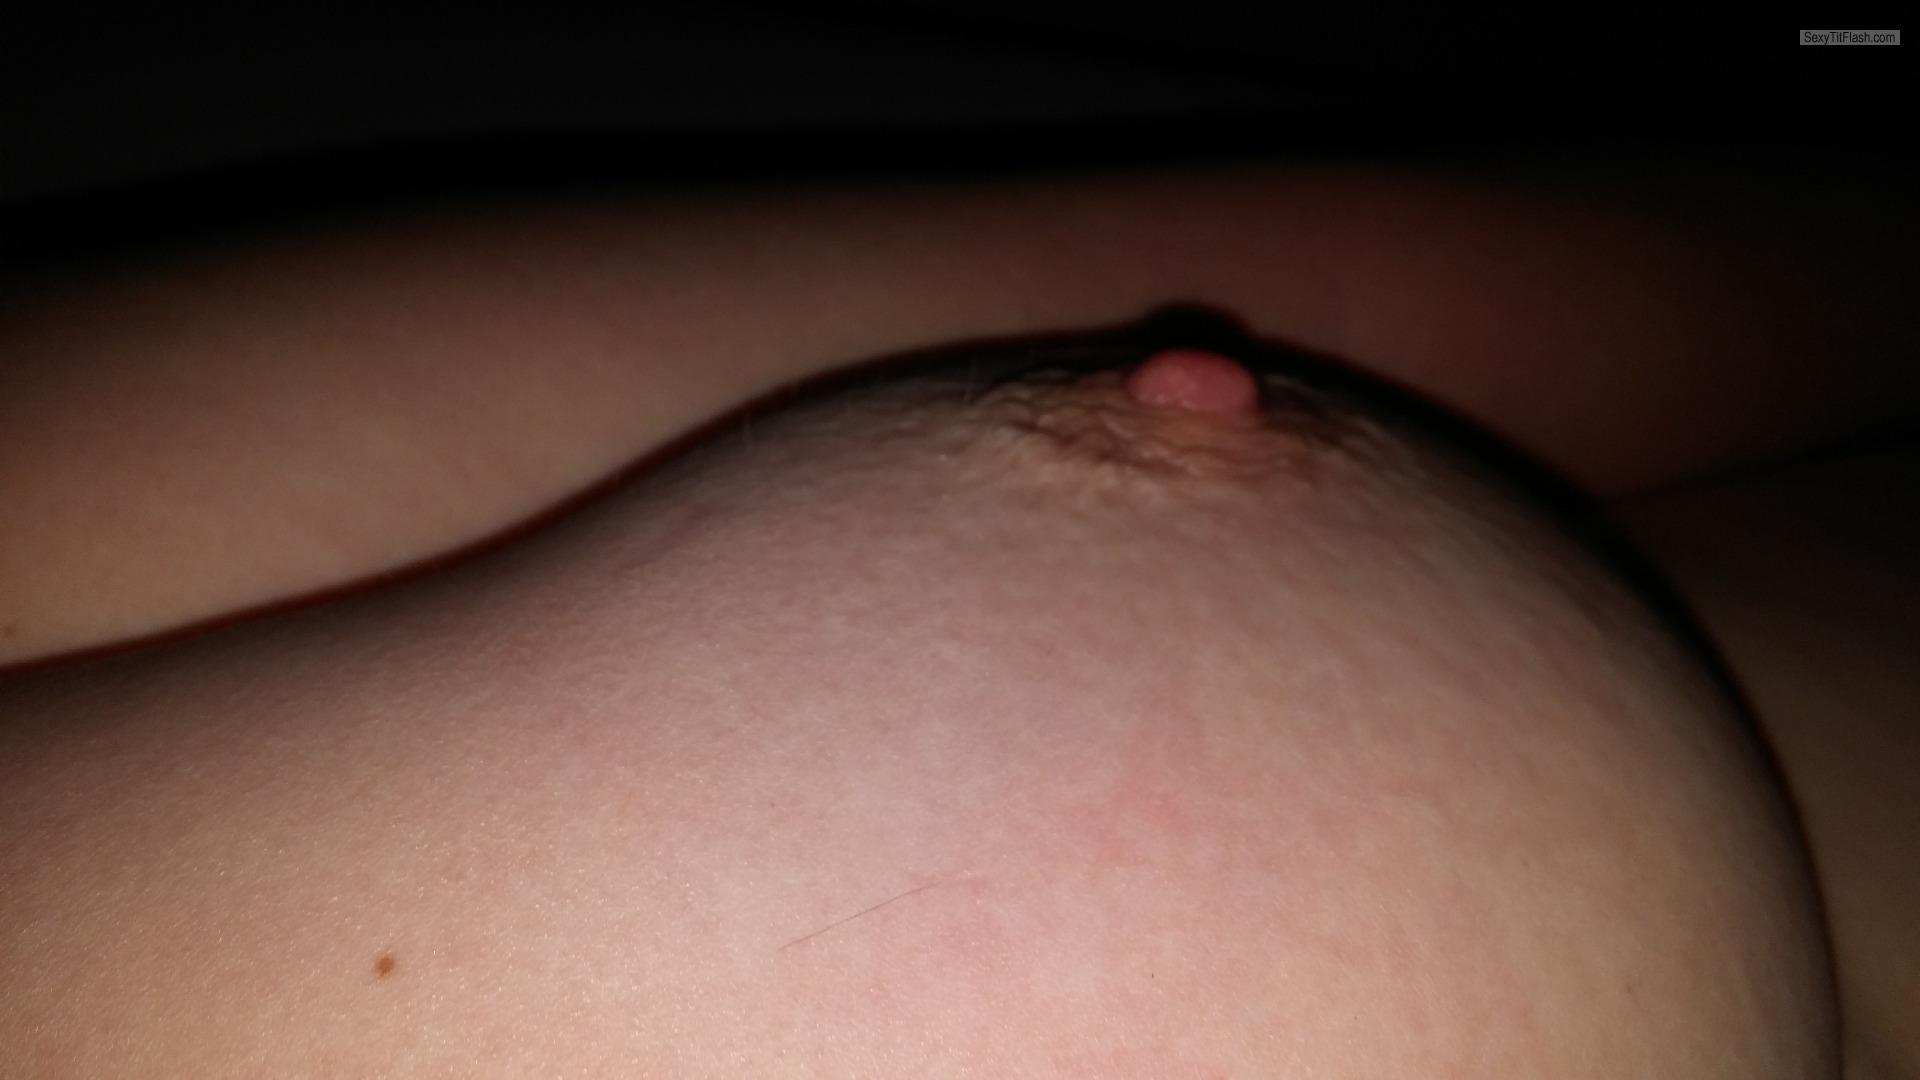 Tit Flash: My Big Tits (Selfie) - Charlie Ginger from United Kingdom